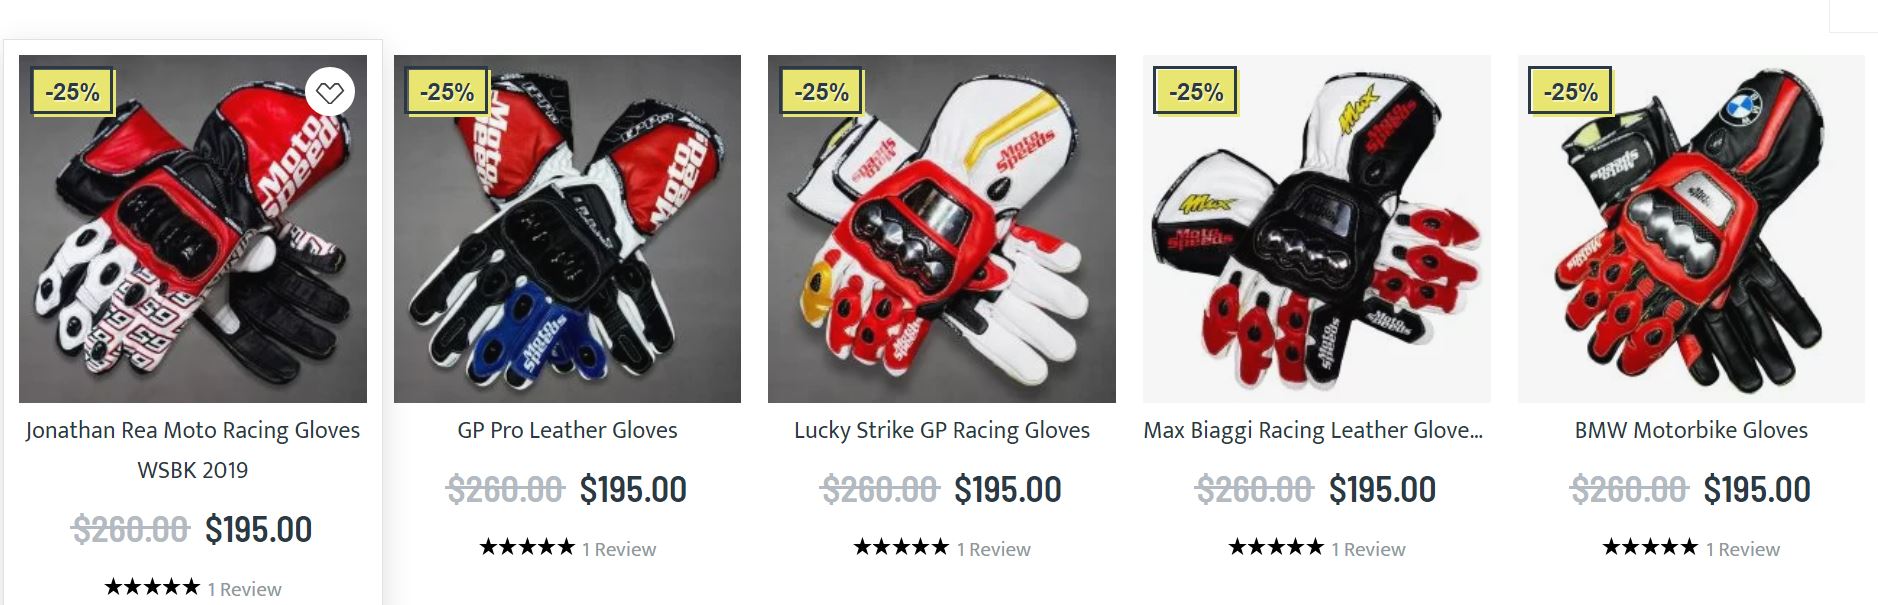 Motogp gloves